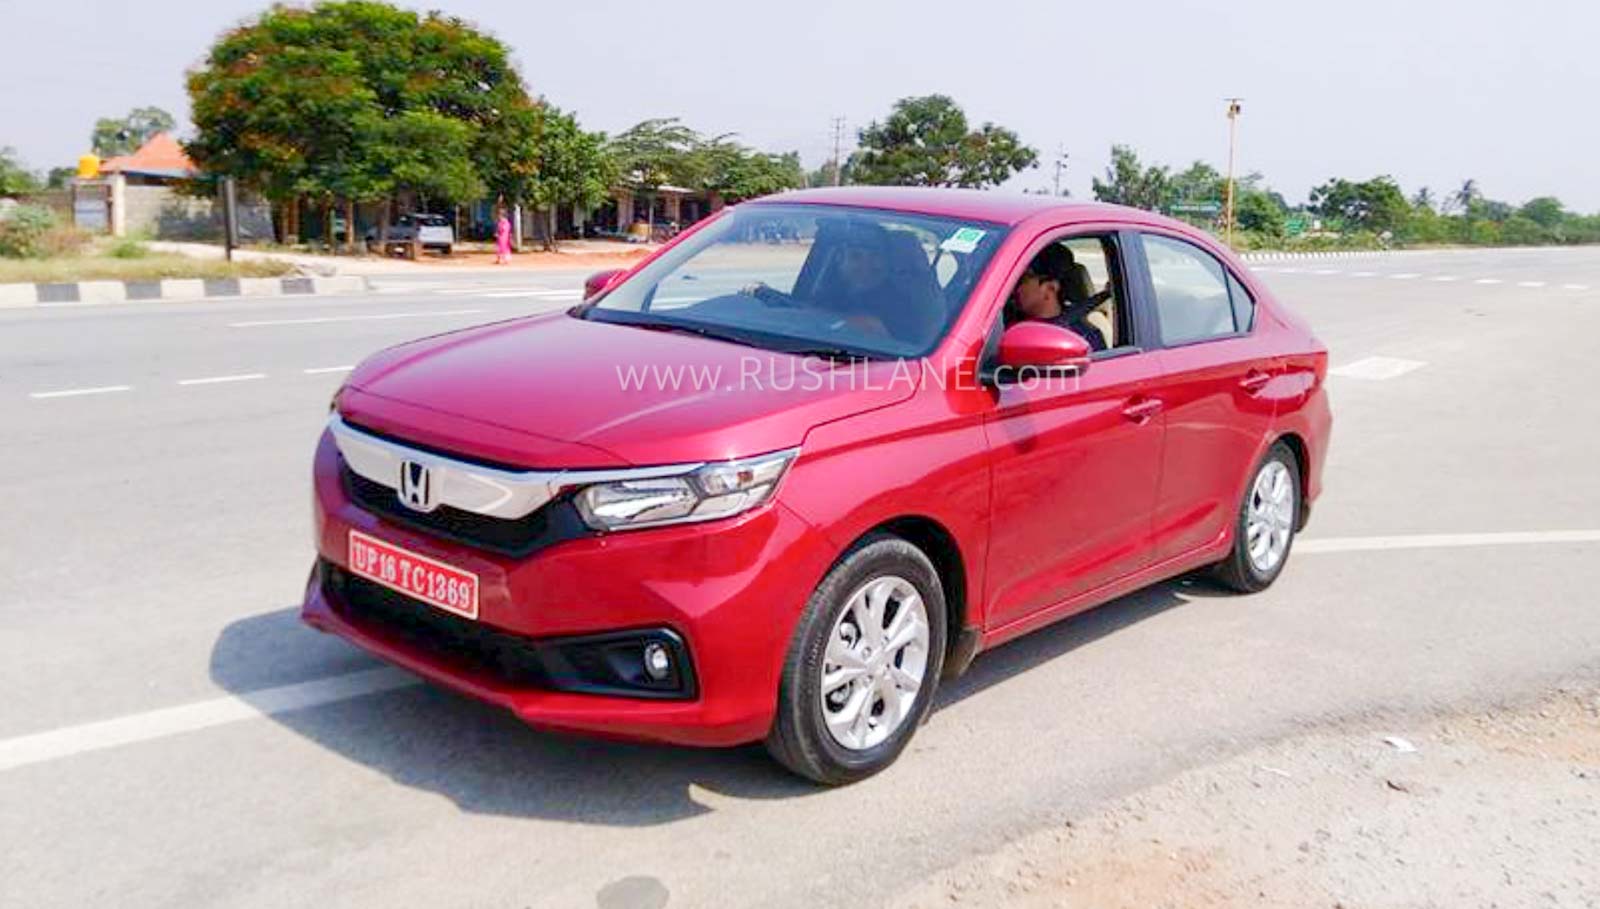 Honda Amaze sales India